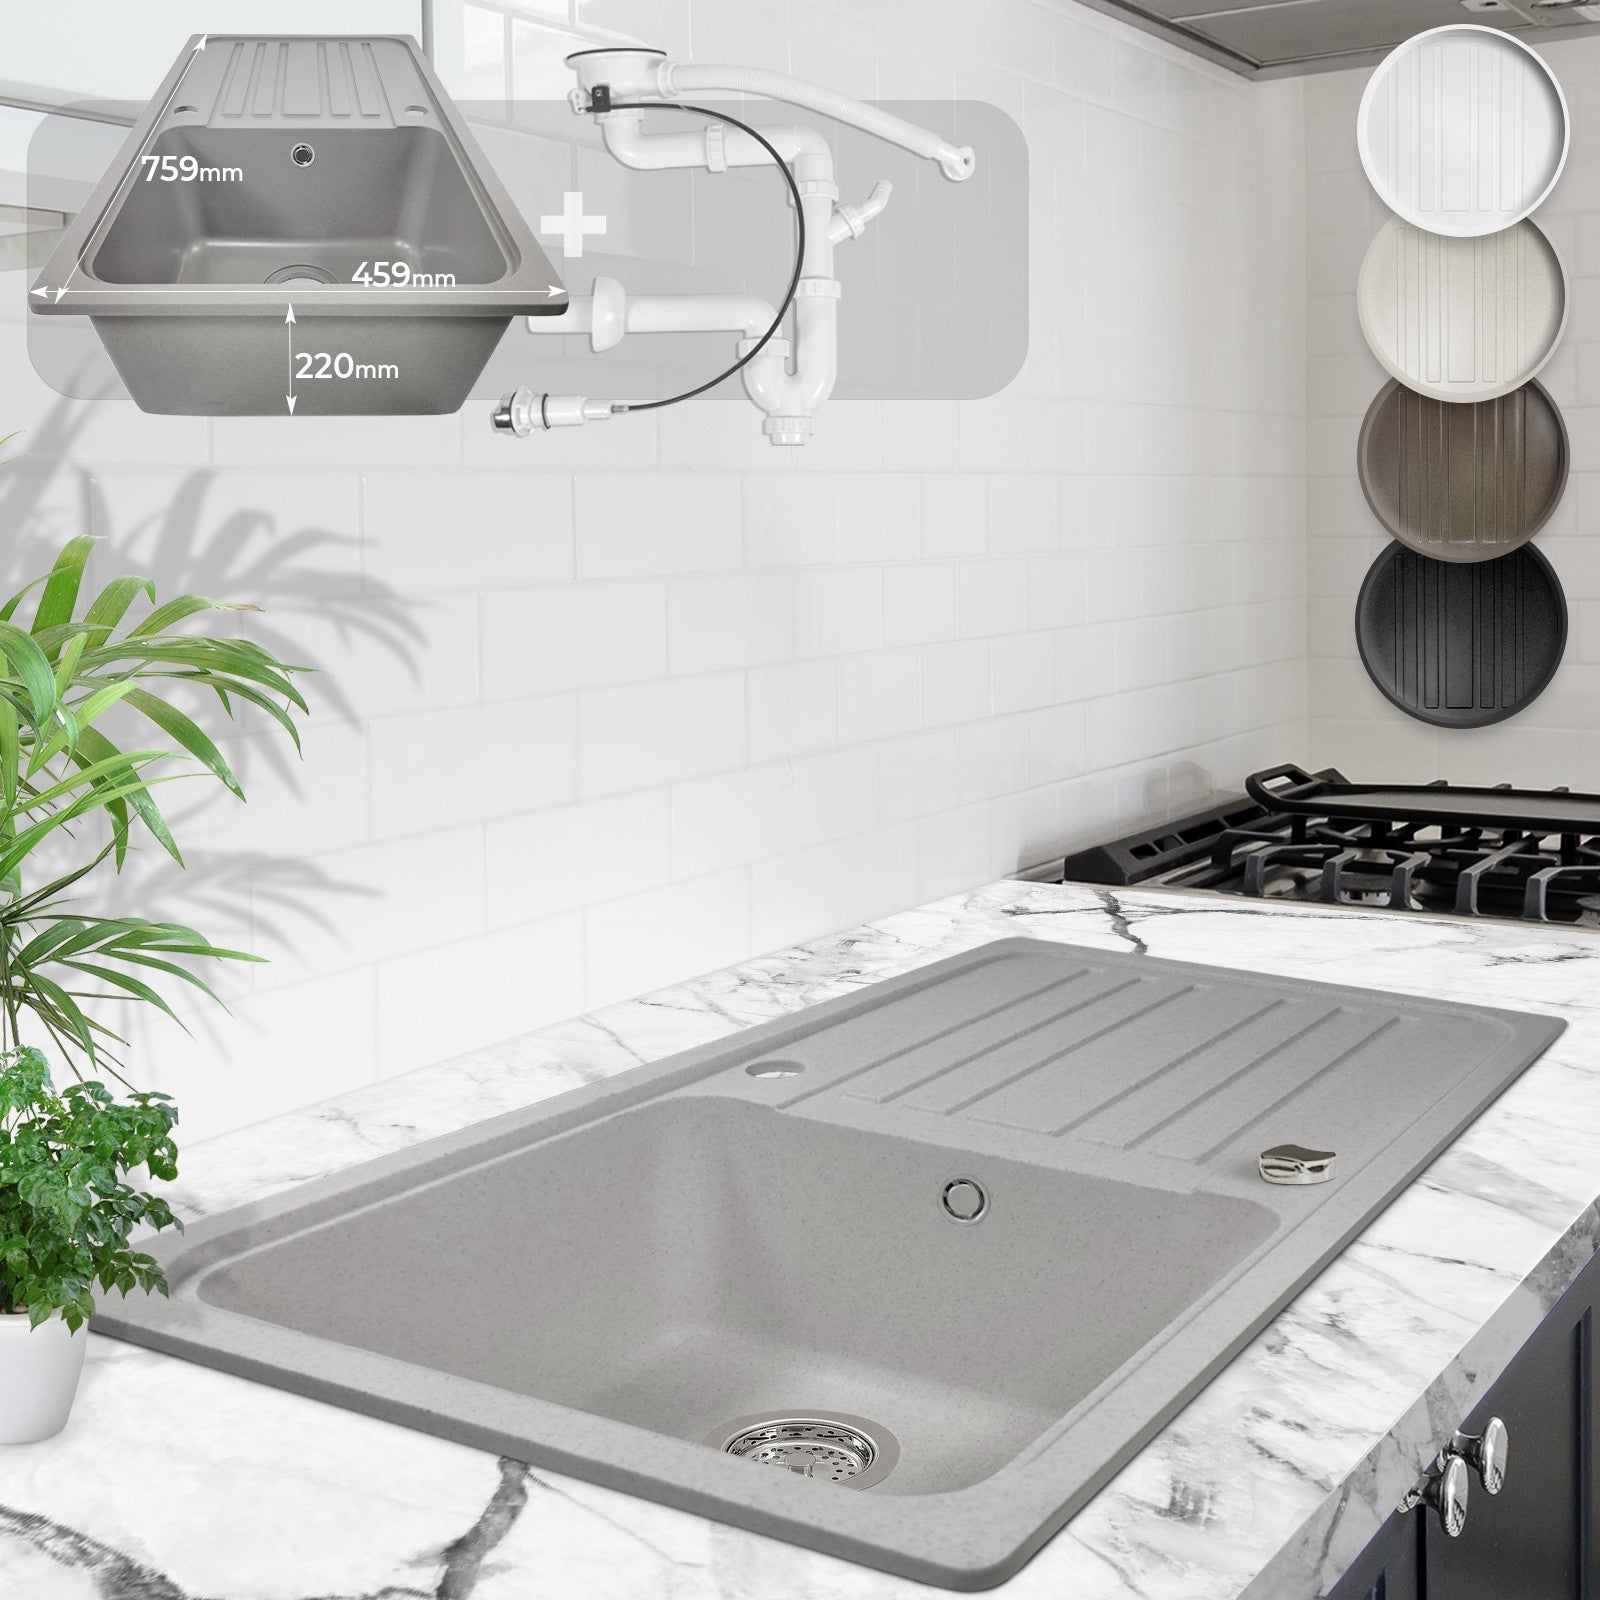 Køkkenvask i granit m/ afløb, vendbart afløb, rektangulært, vendbart, plettet, grå